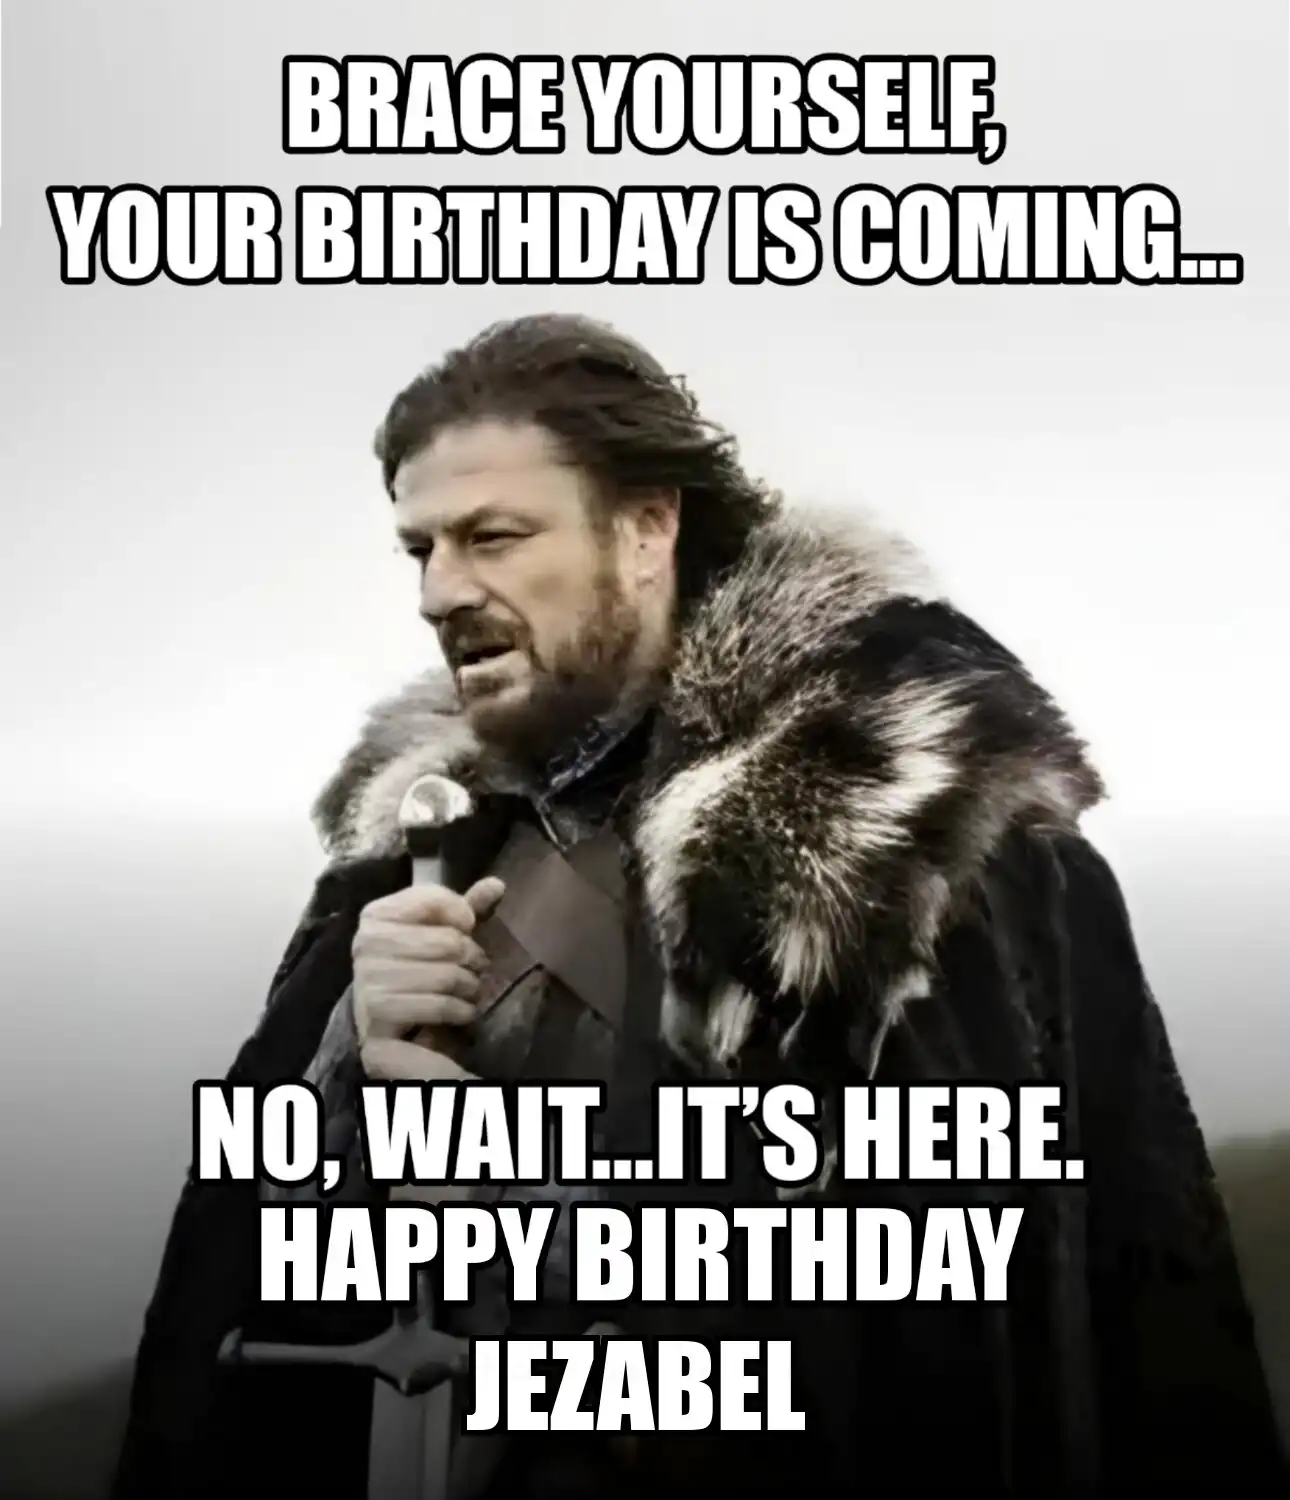 Happy Birthday Jezabel Brace Yourself Your Birthday Is Coming Meme